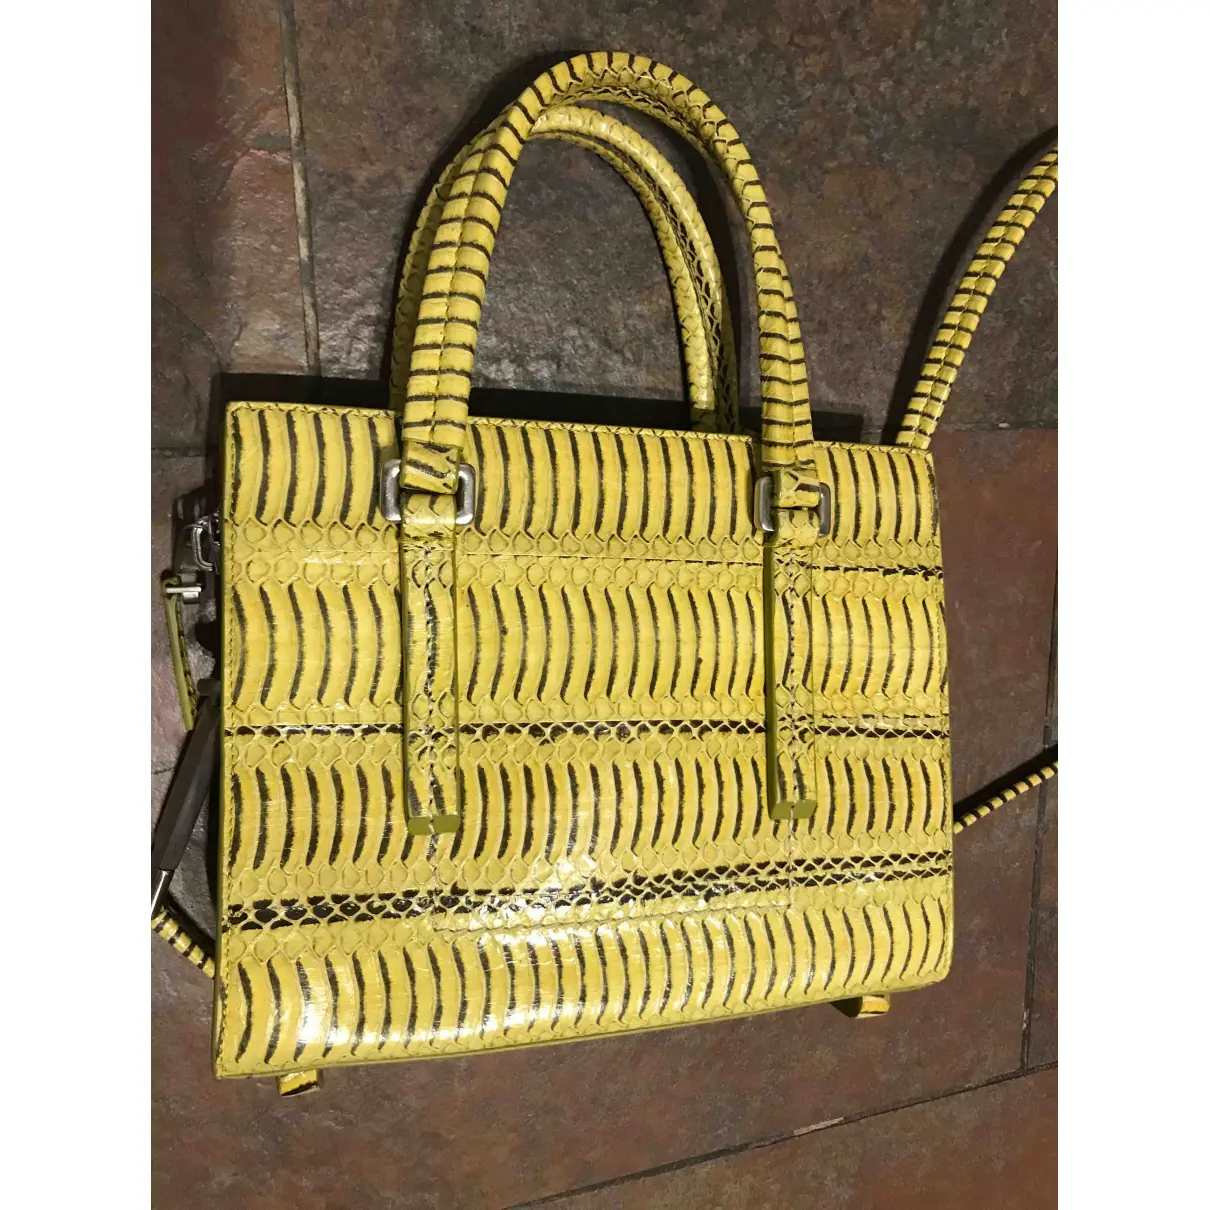 Buy Rick Owens Python handbag online